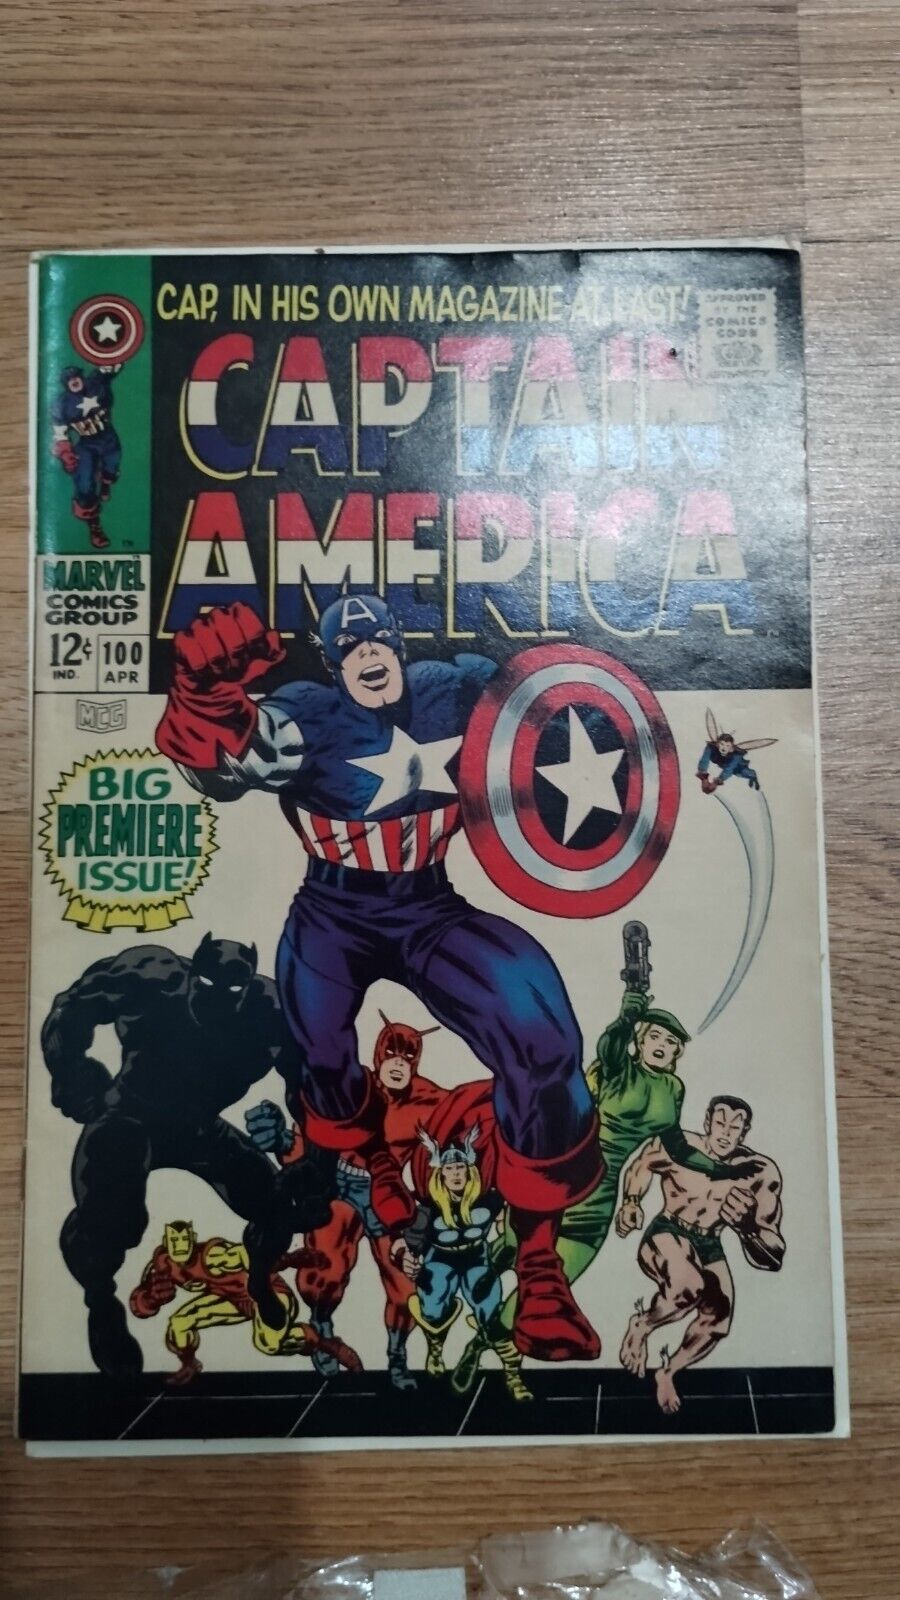 Captain America #100 (Marvel Comics April 1968)